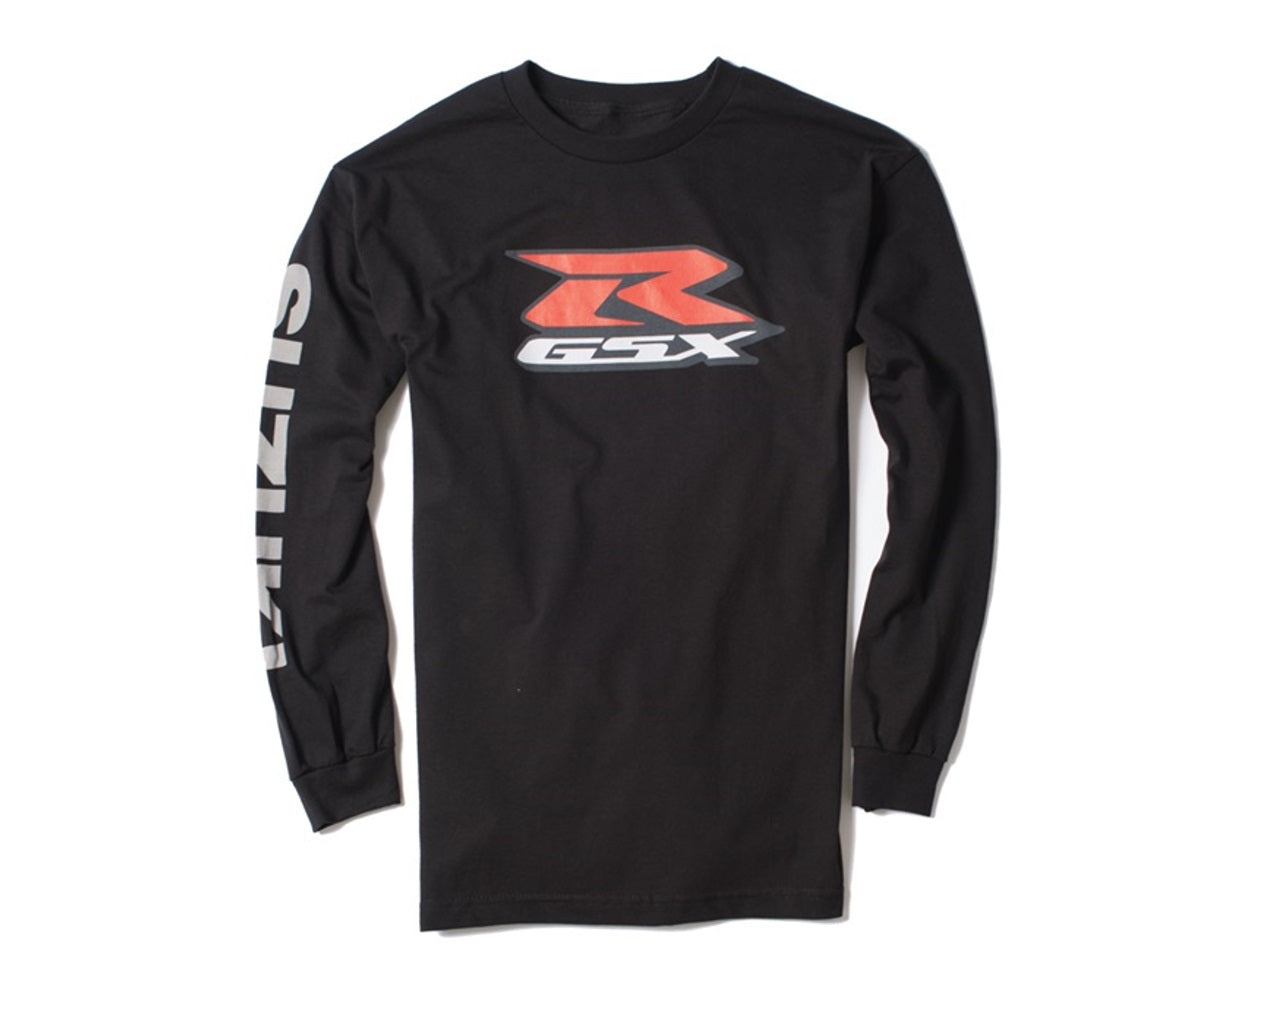 Suzuki GSXR Long Sleeve Black Mens T-Shirt 990A0-16252